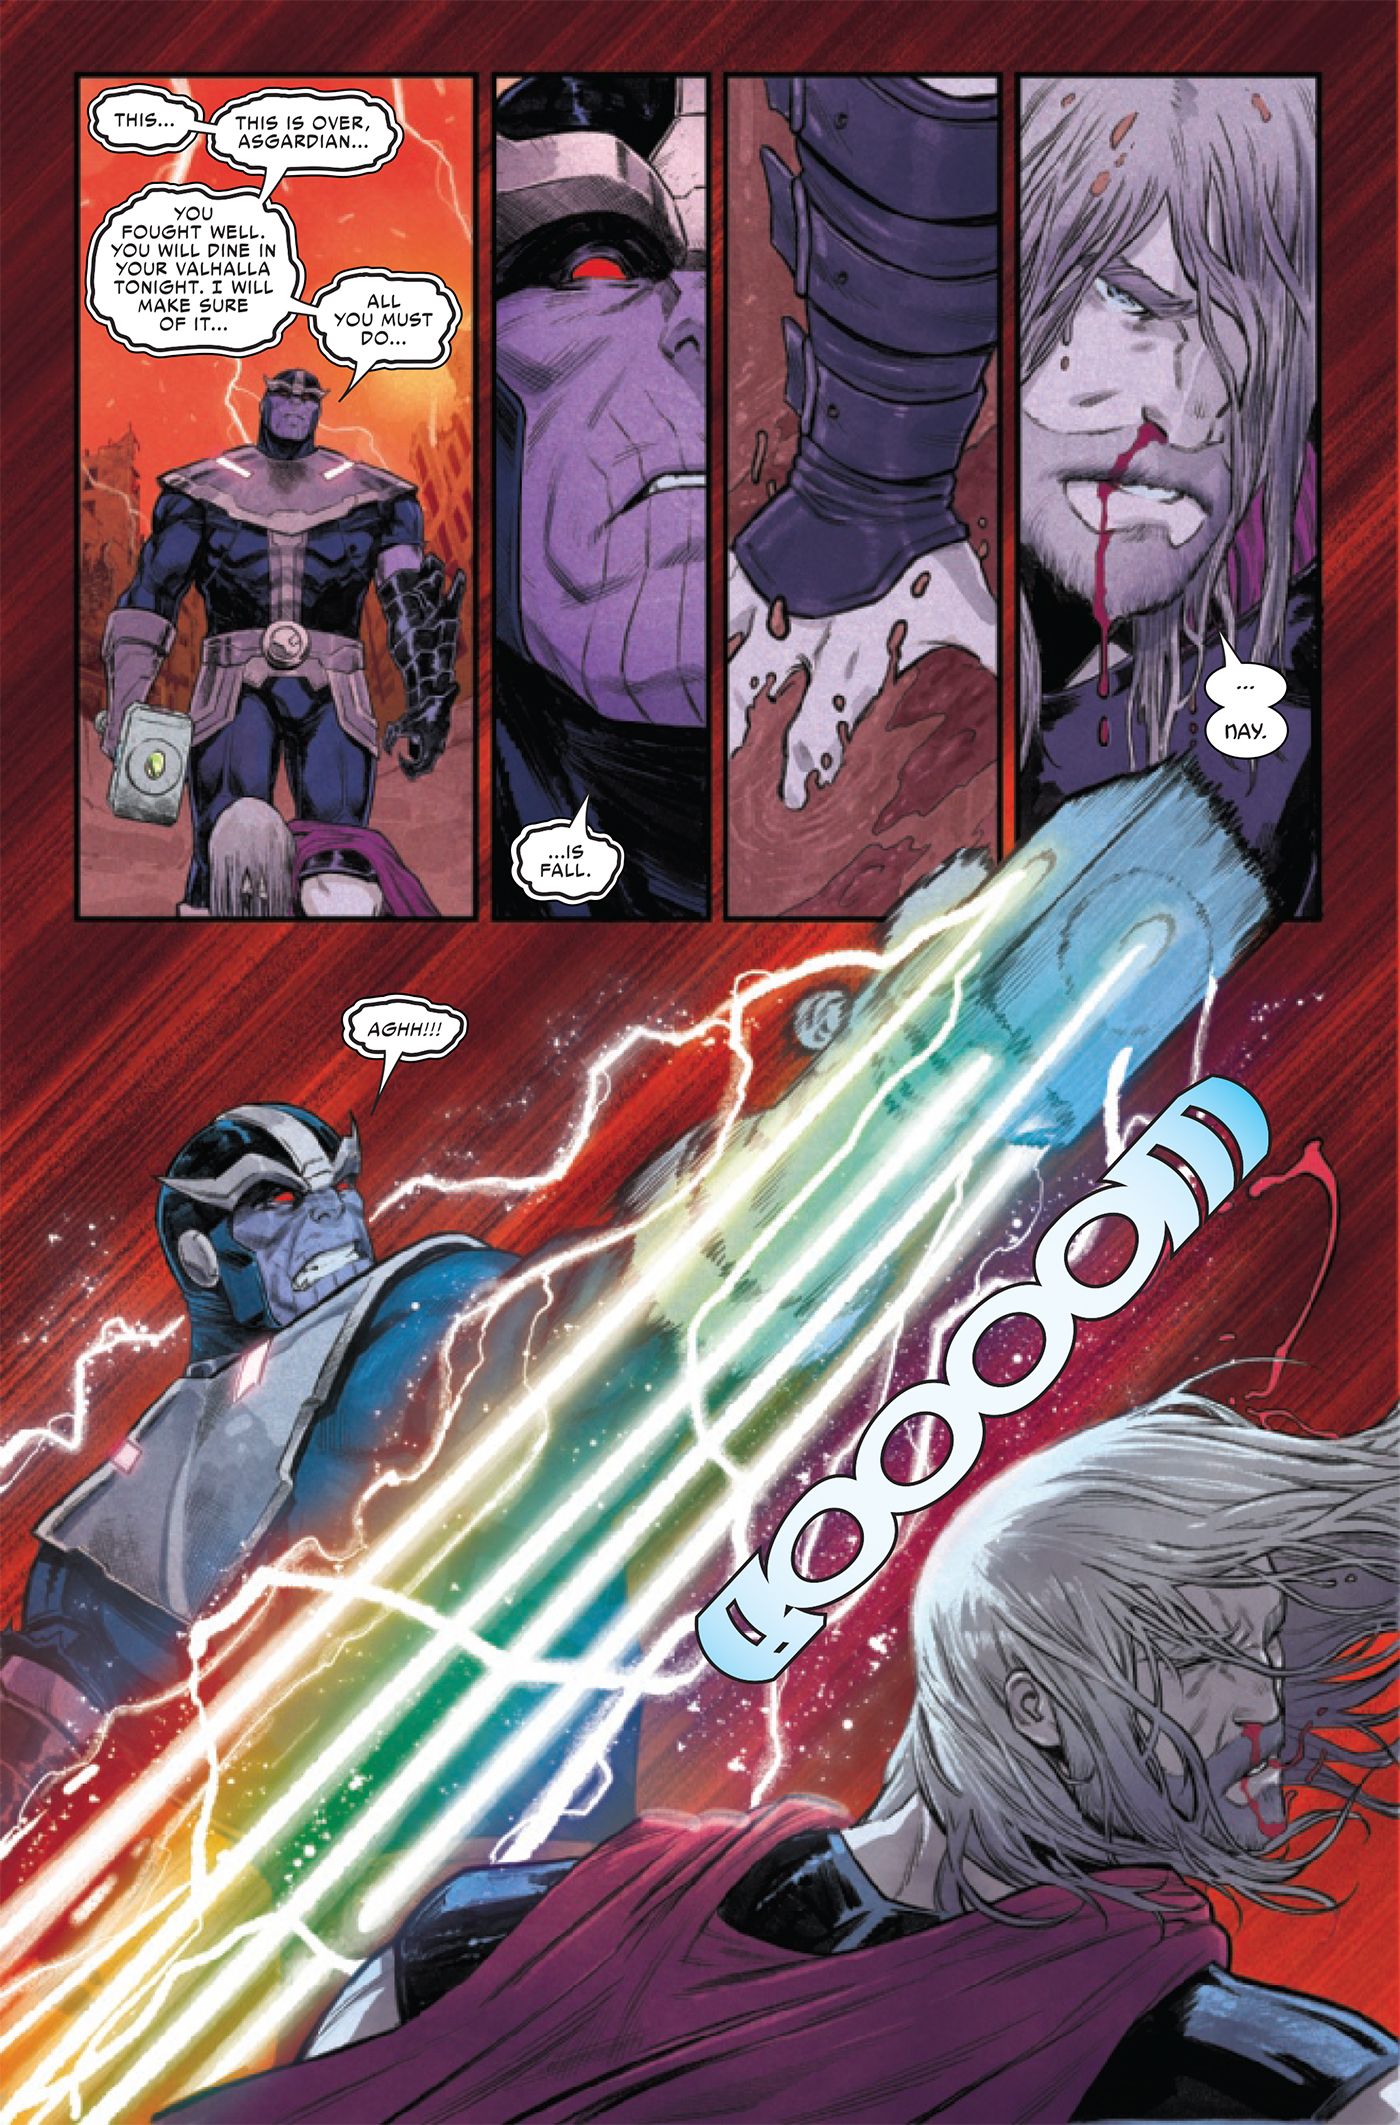 Thanos strikes Thor across the face with Mjolnir.